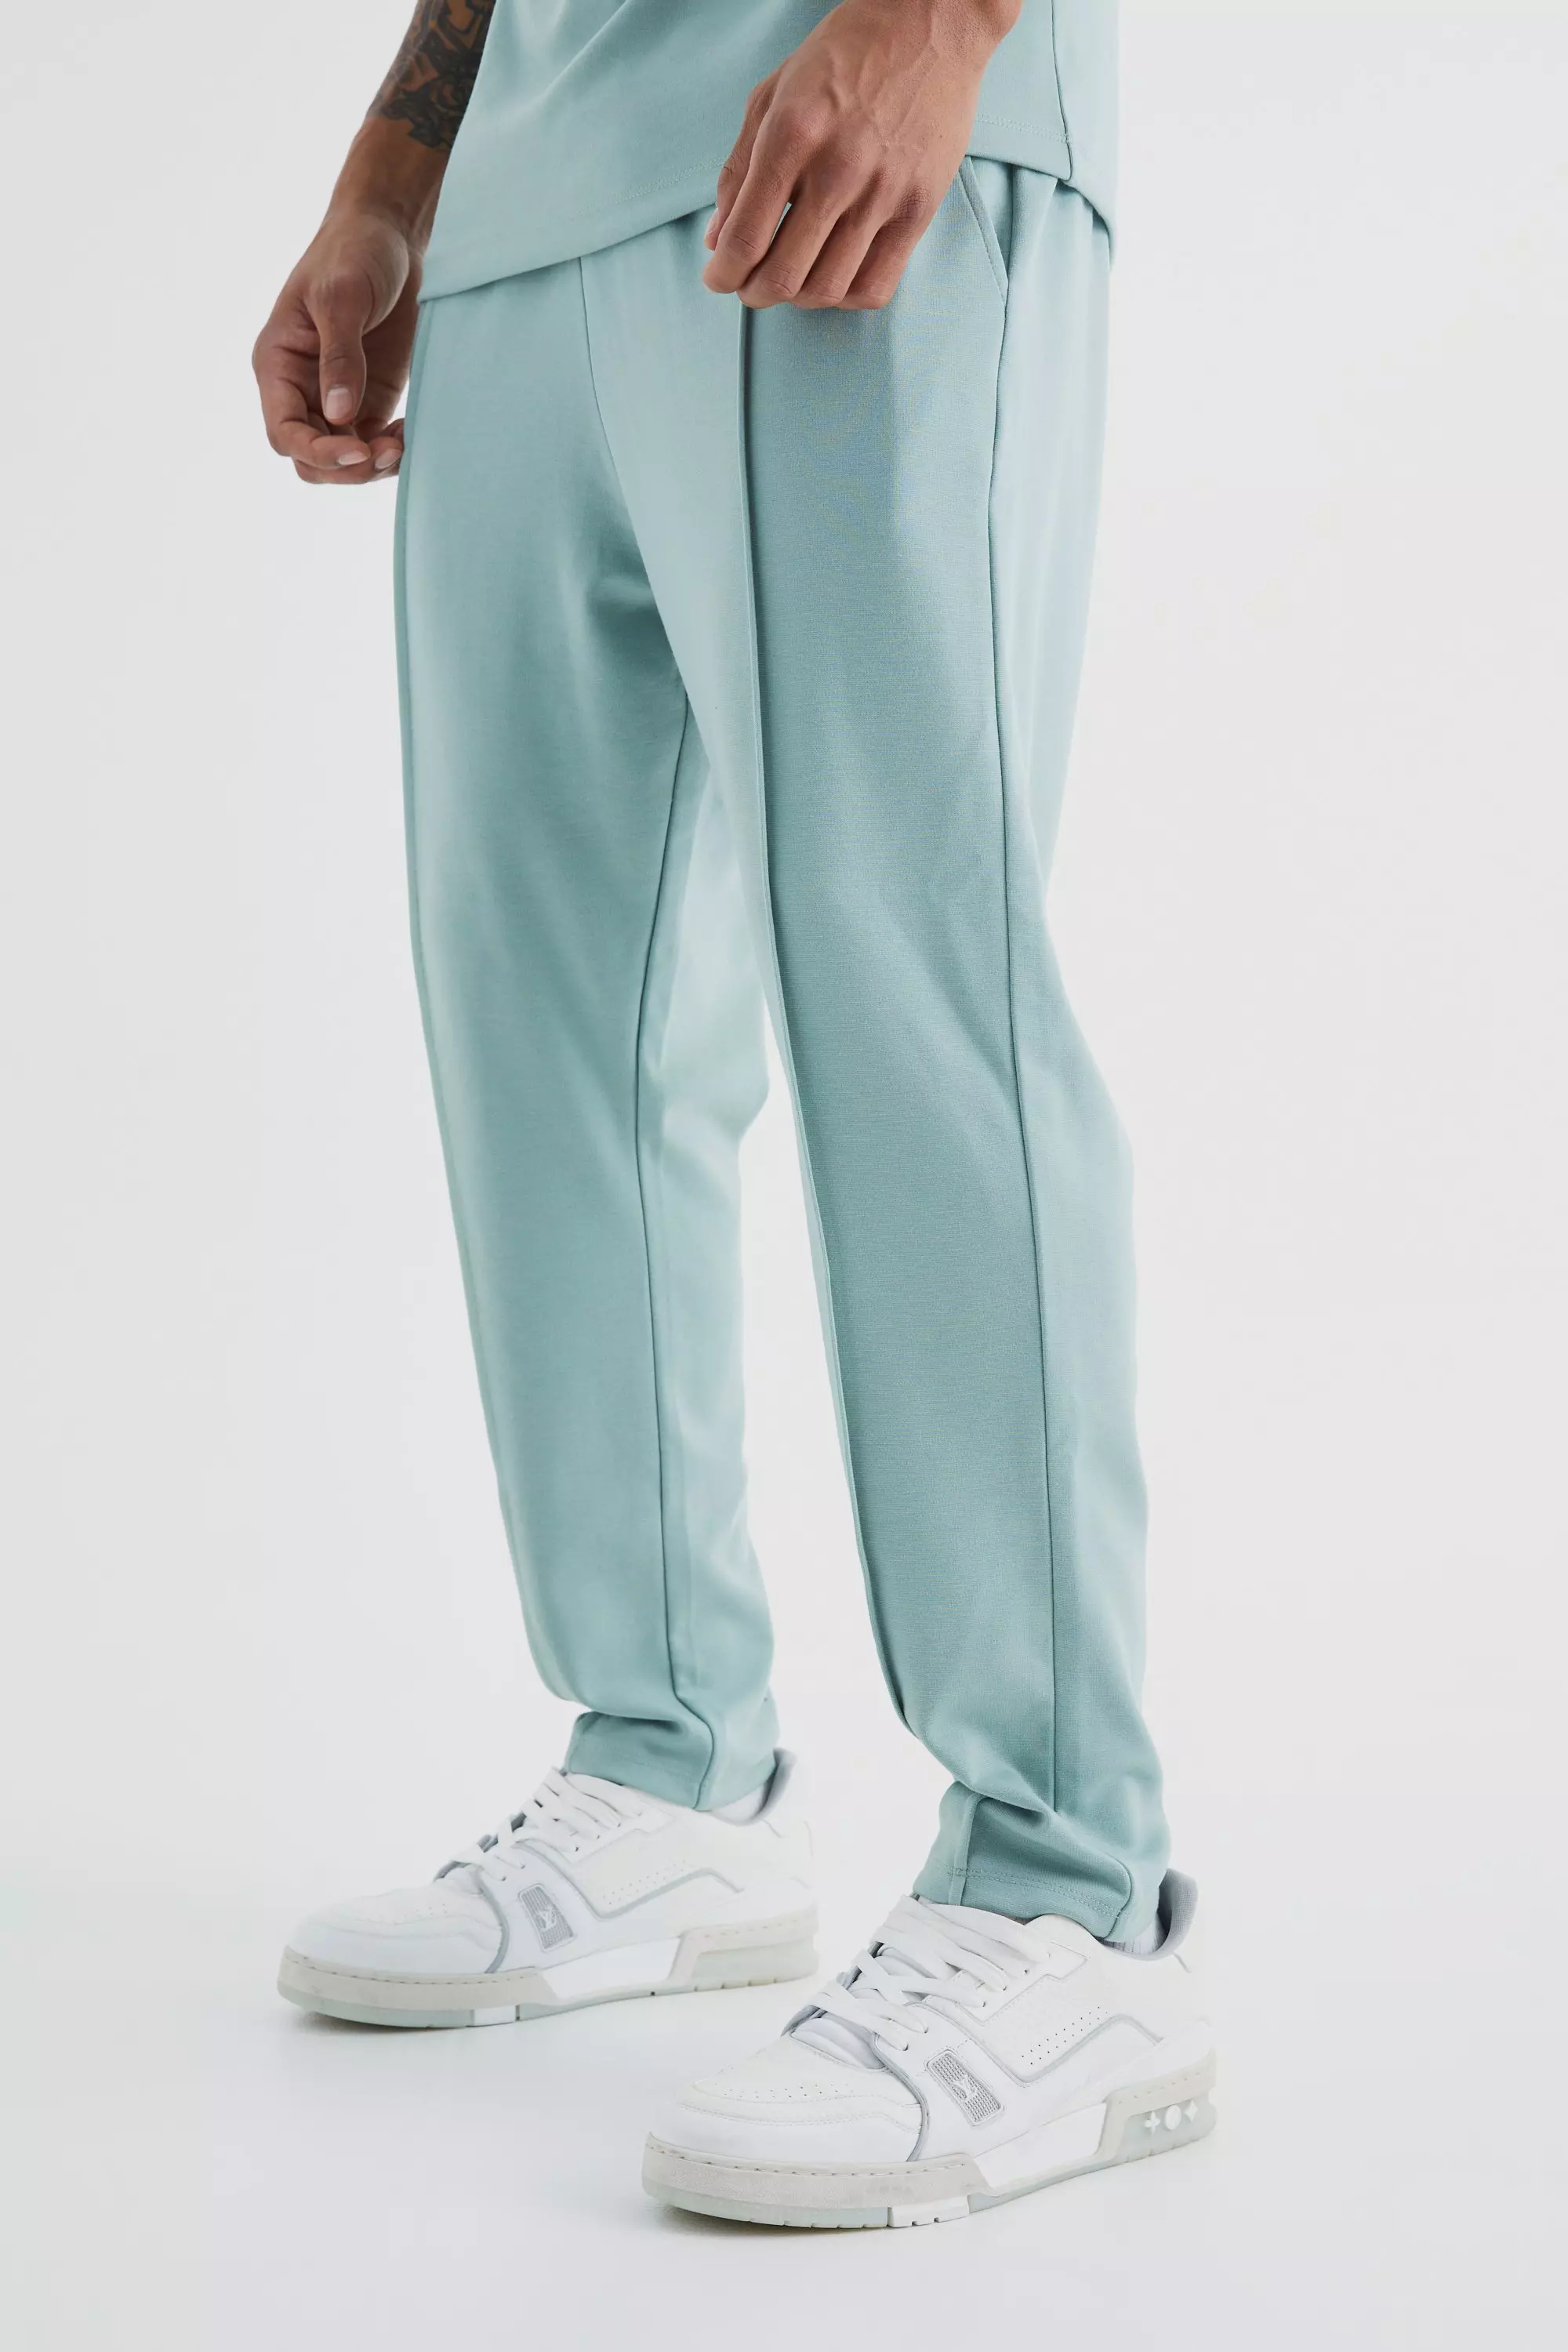 Grande Taille - Jogging Slim - Man Green Homme | Pantalons De Jogging  boohoo « PASSION OCCITANE